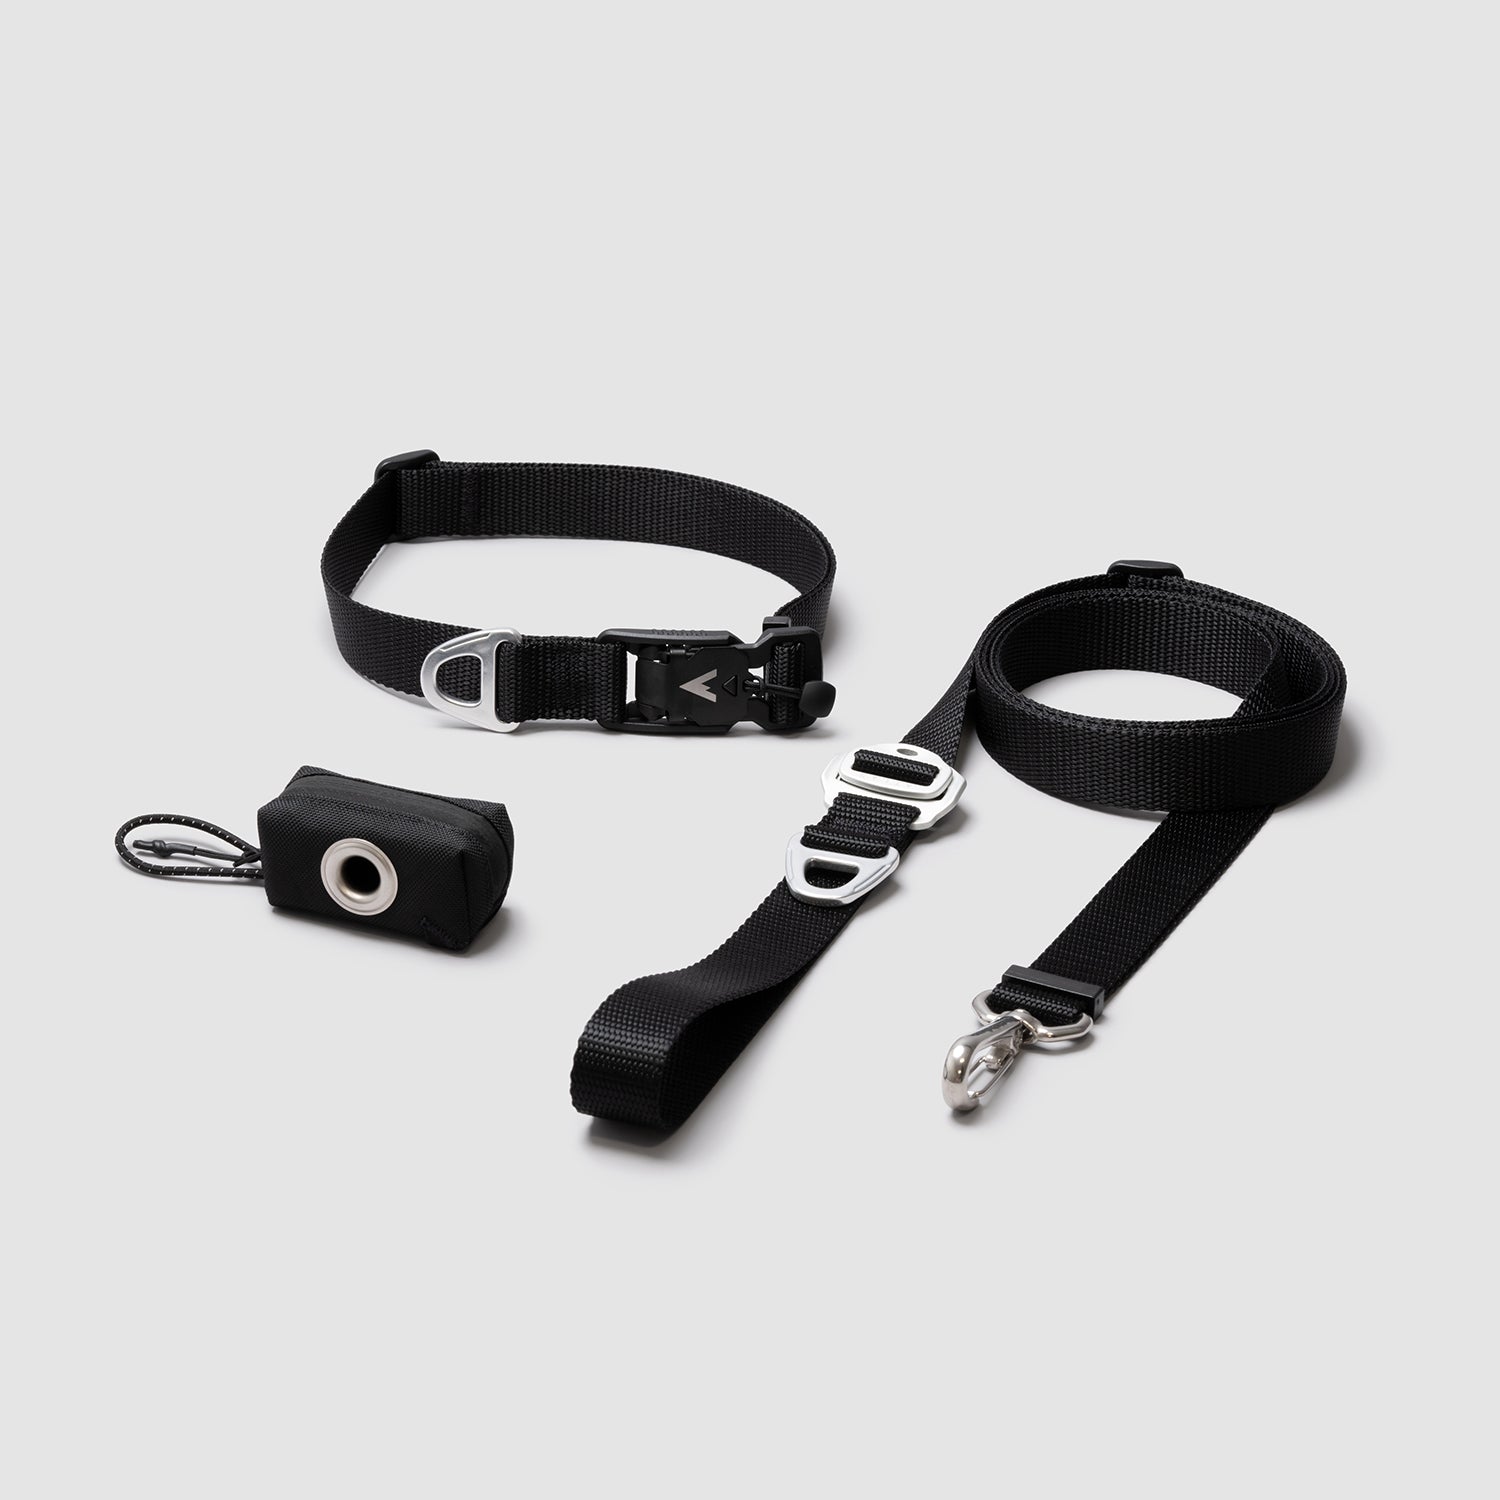 atlas pet company lifetime lite kit with lifetime warranty adjustable dog leash collar and pouch --black